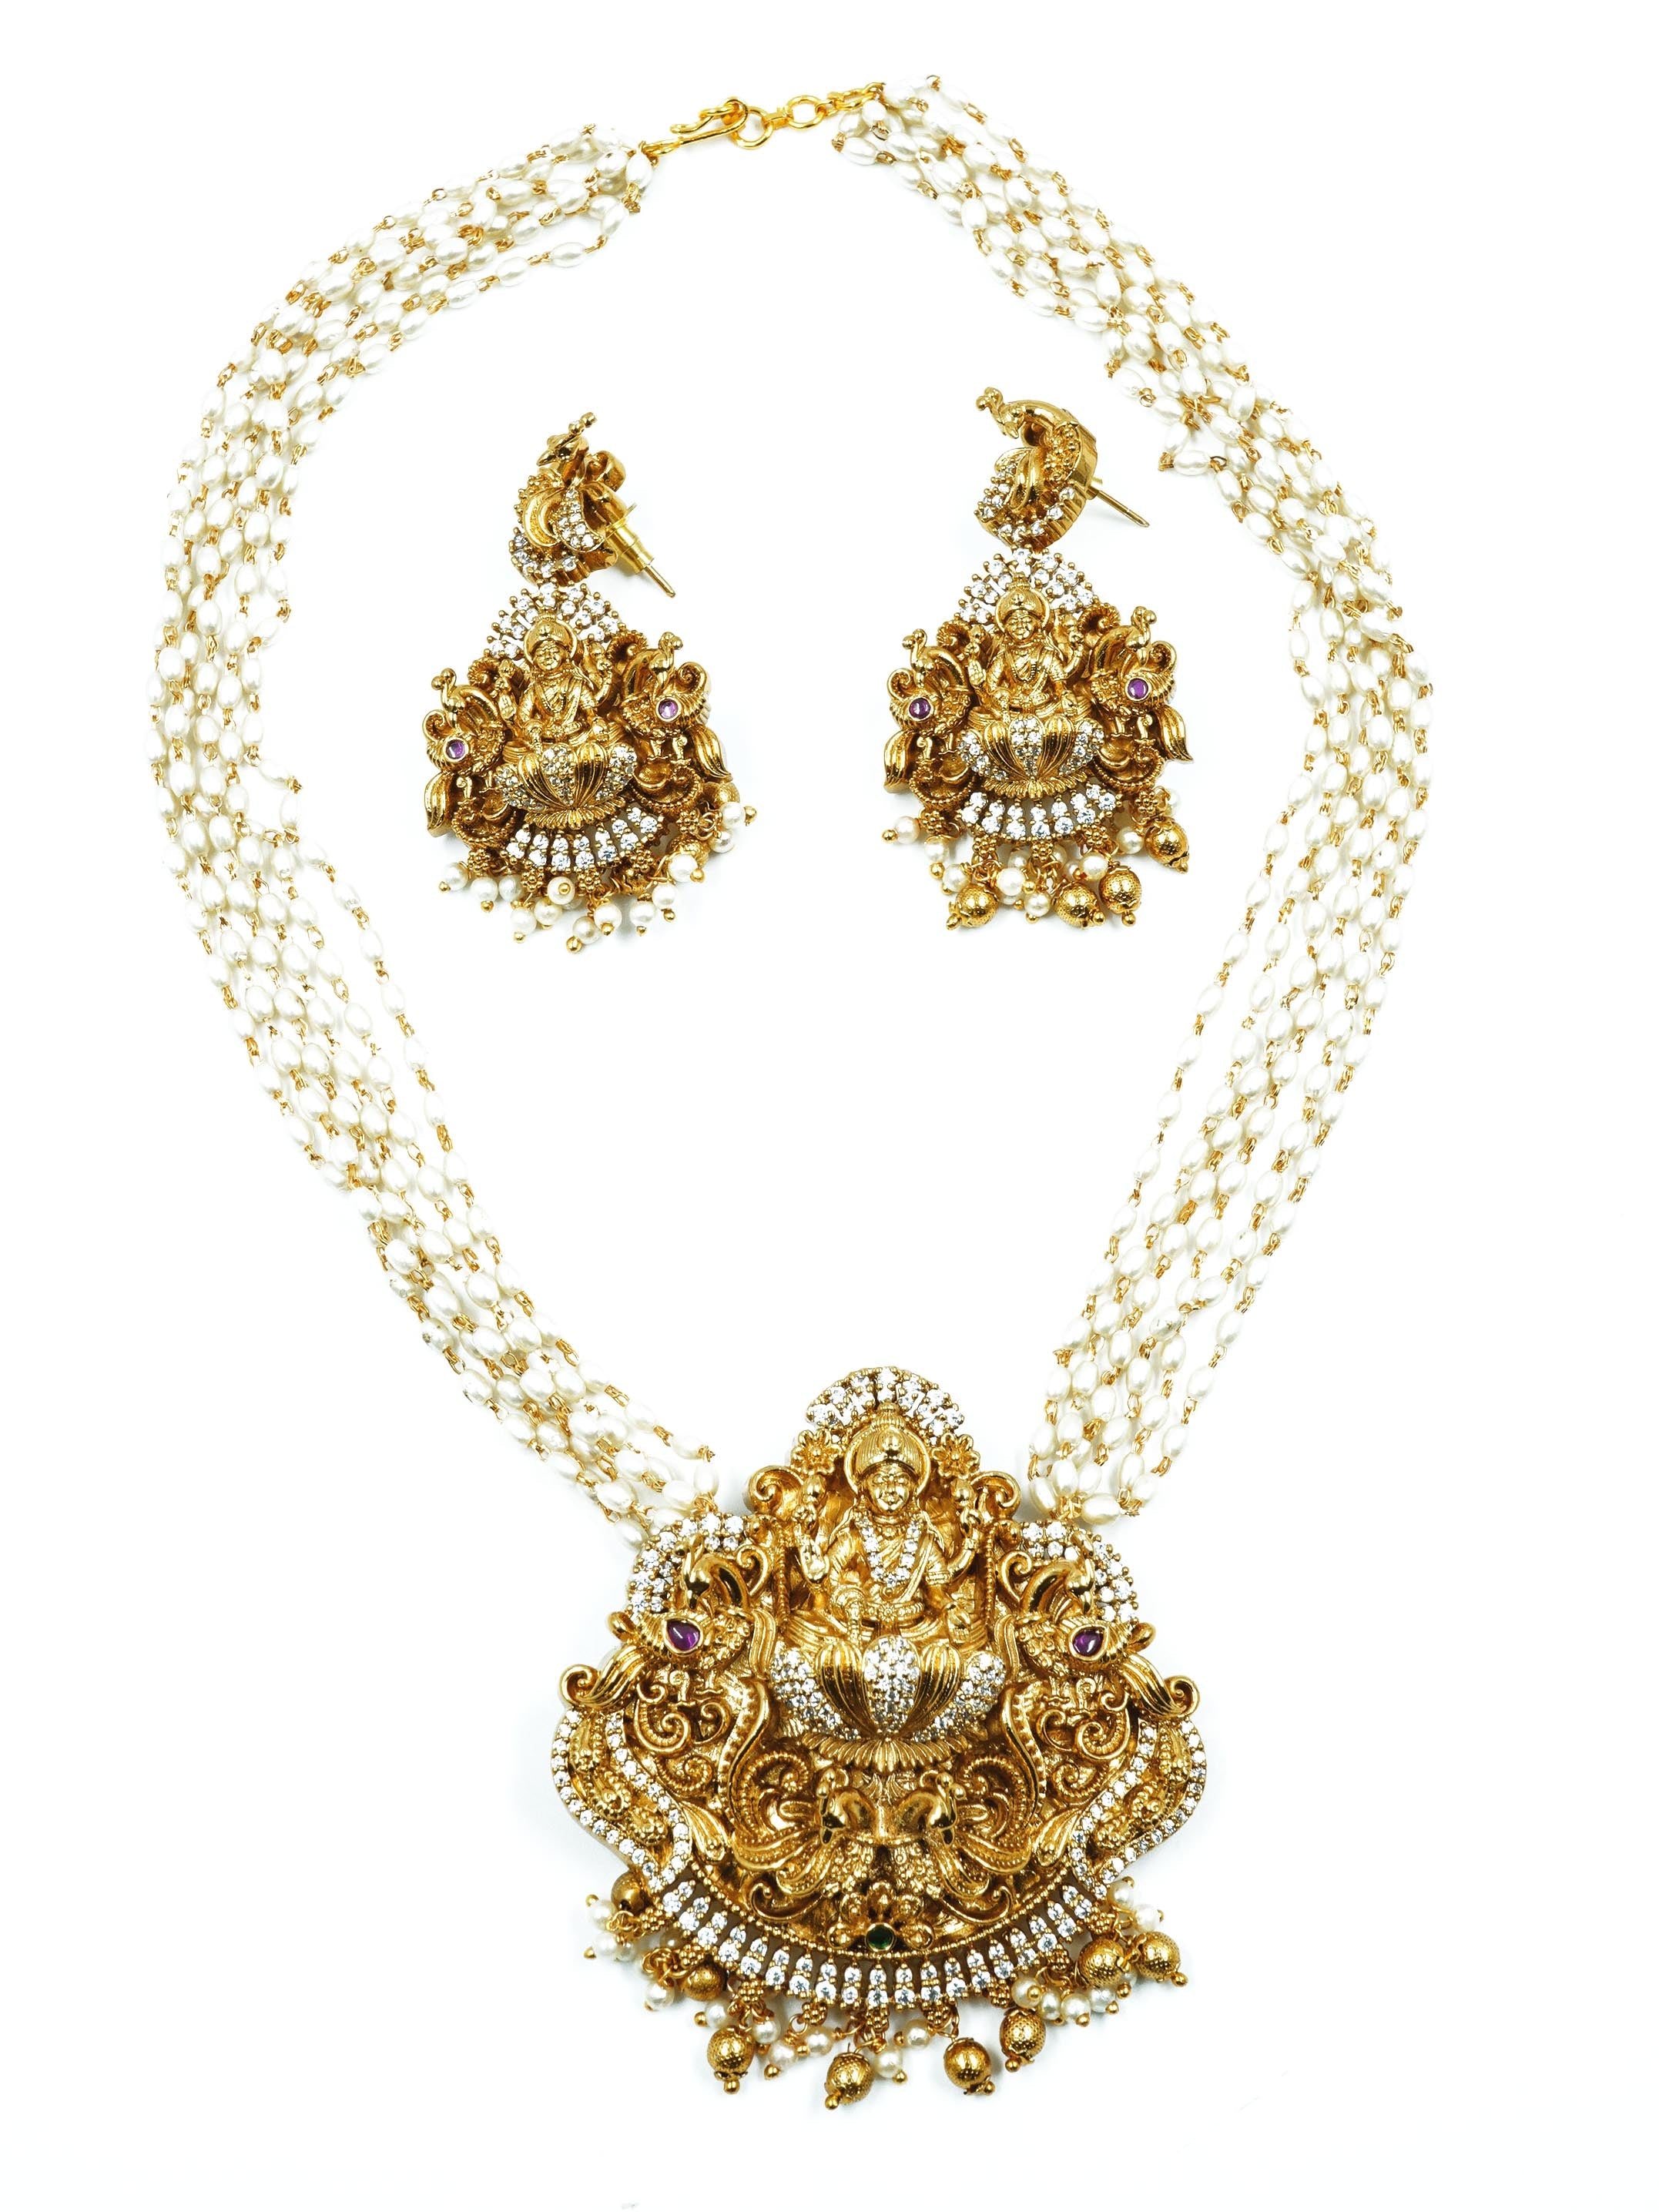 Premium Gold Finish Long Laxmi Hara Necklace Set with Pearl mala and CZ Stones 16189N